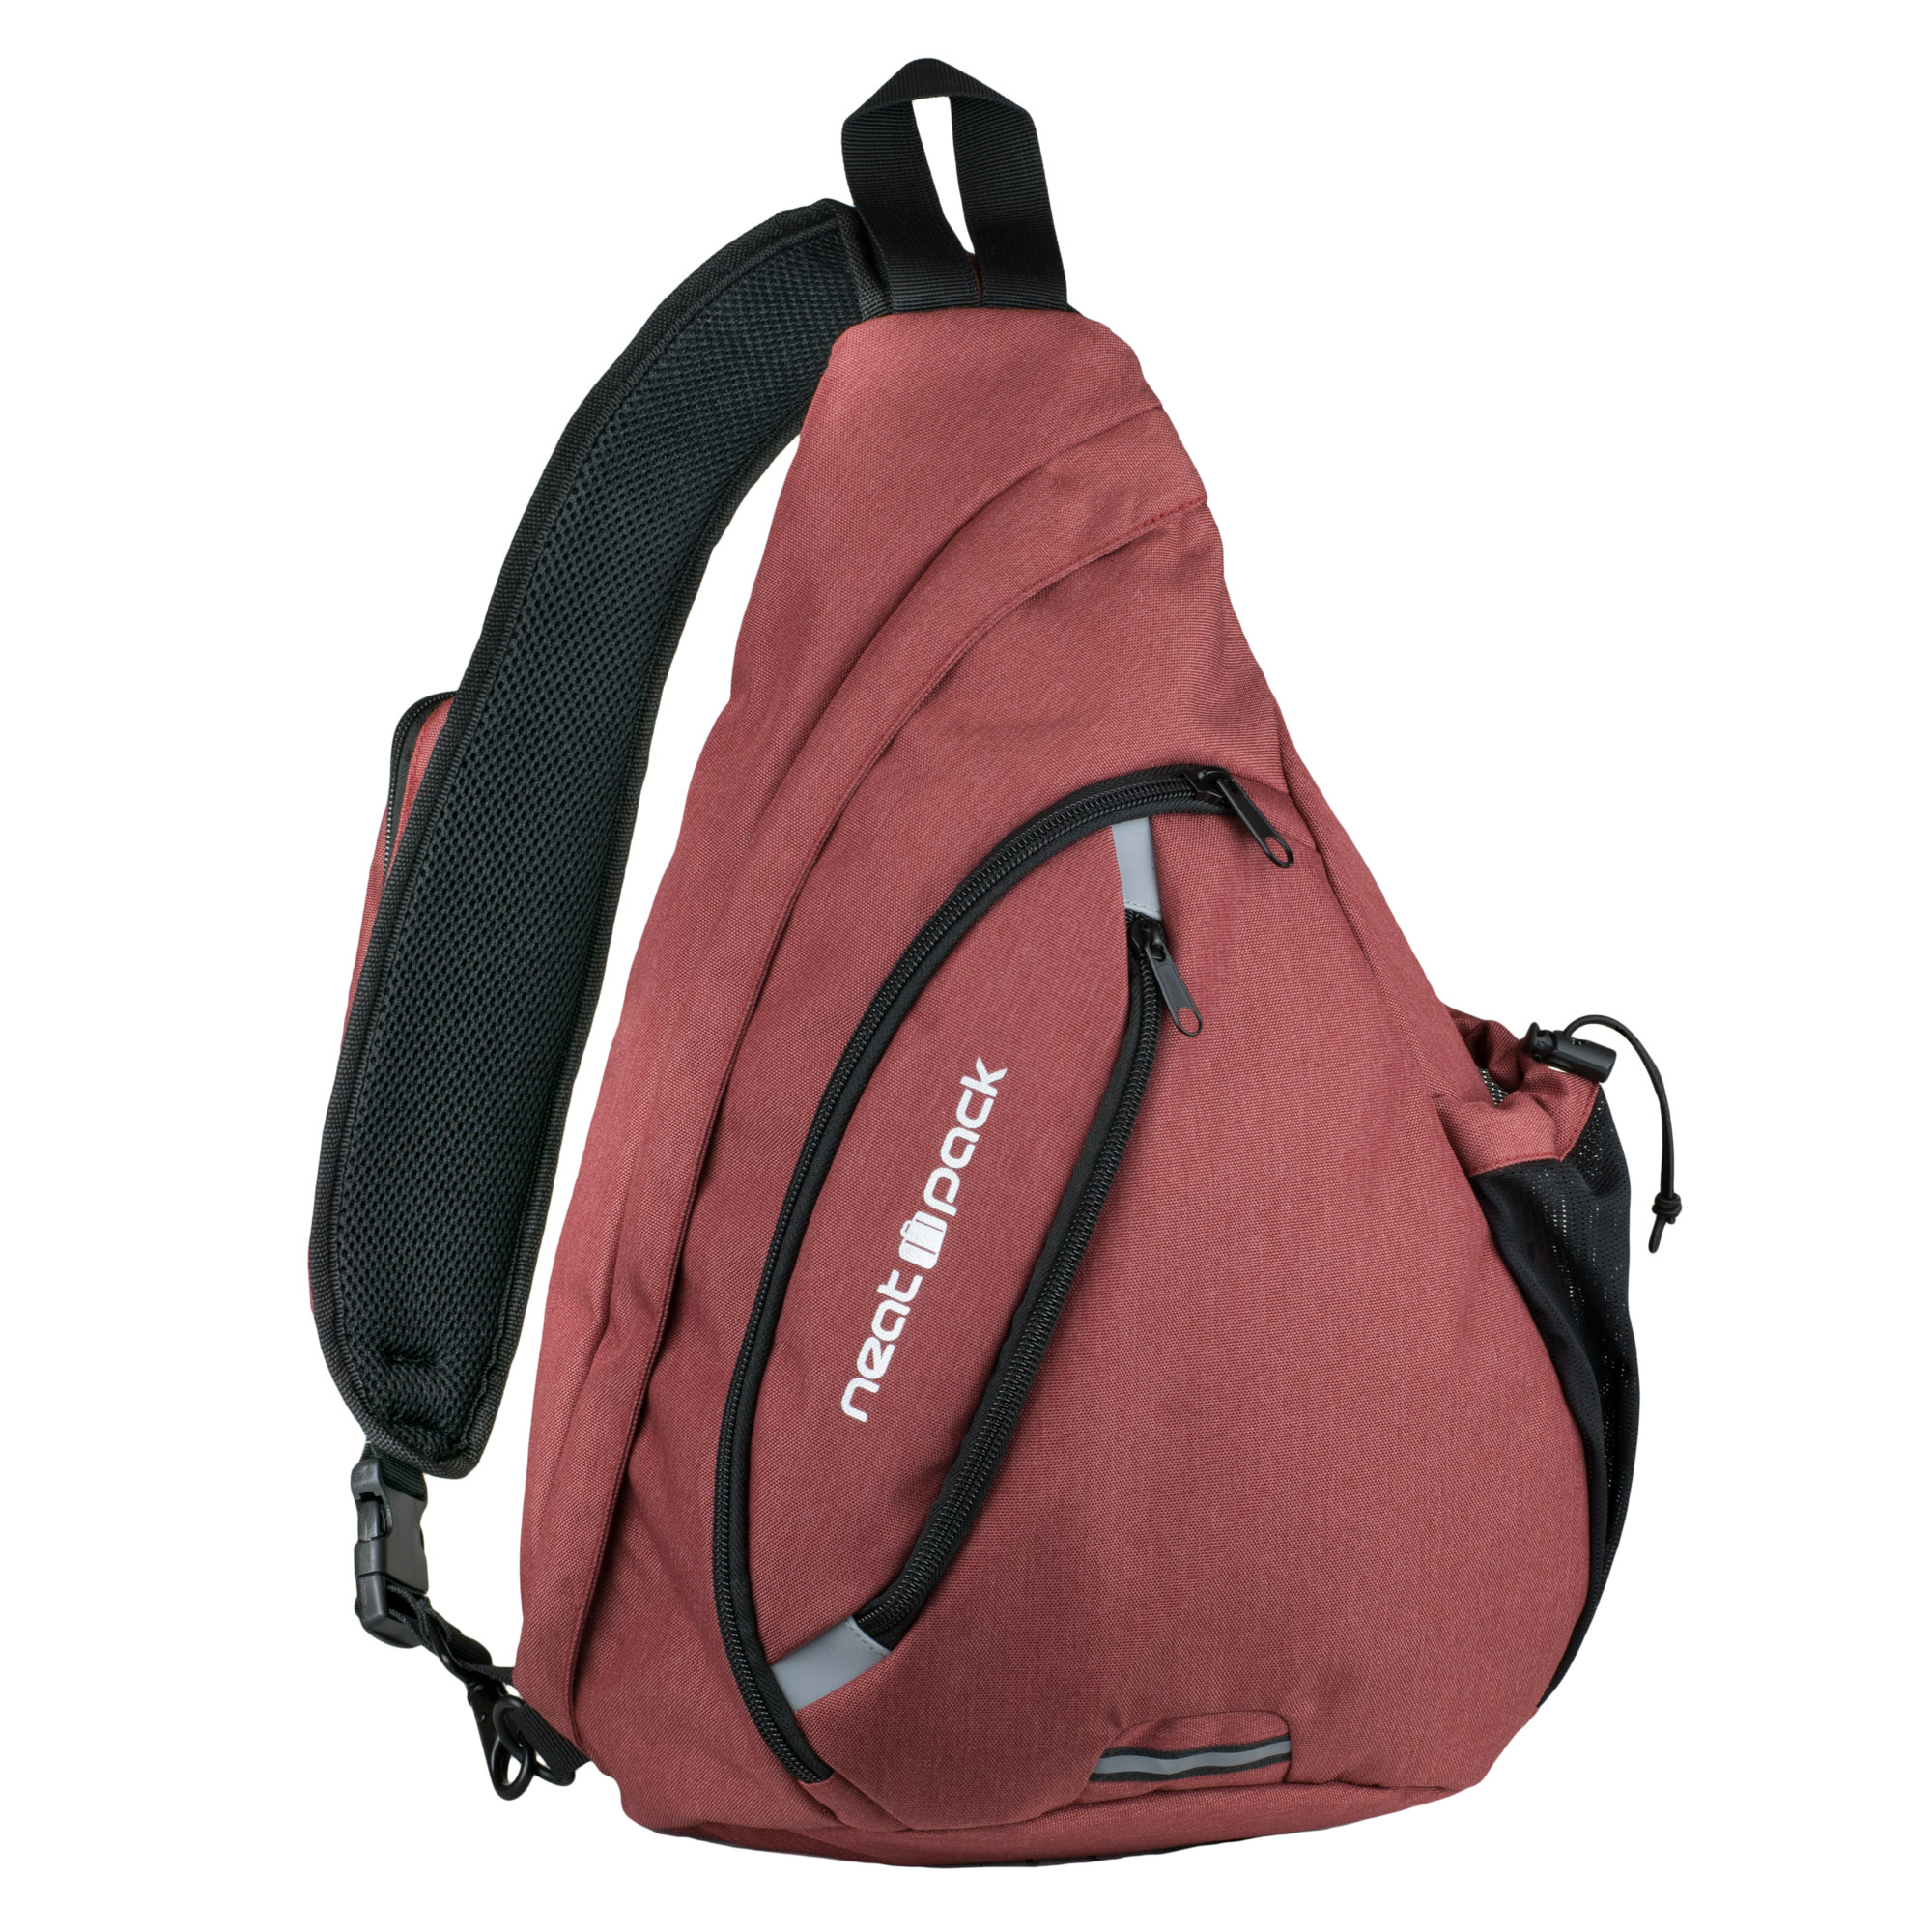 Versatile Canvas Sling Bag / Urban Travel Backpack - Rustic - image 1 of 8